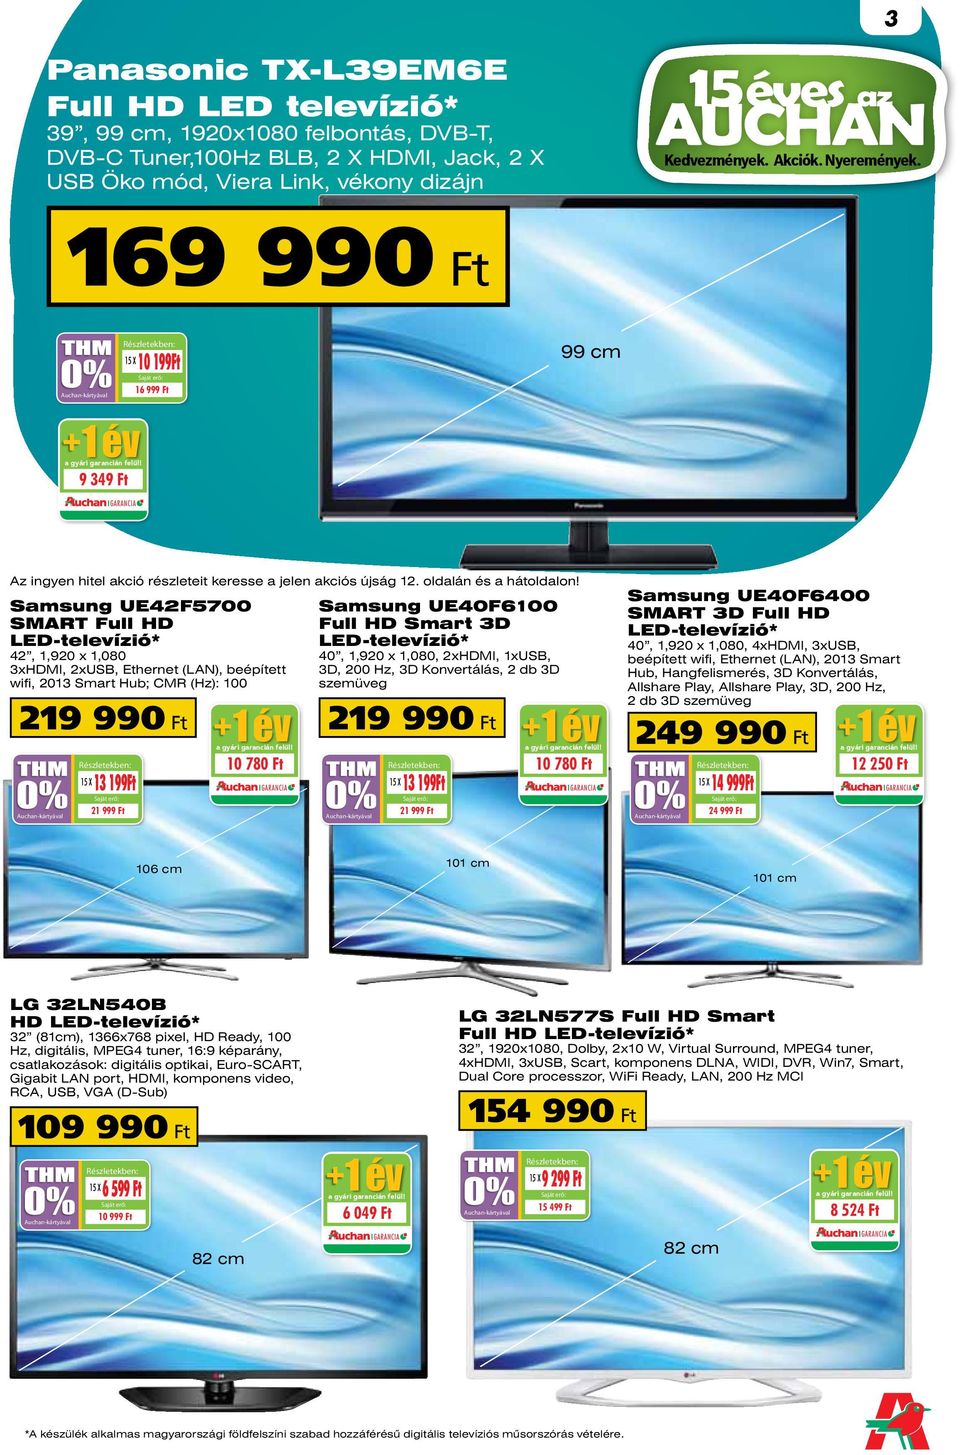 Samsung UE42F5700 SMART Full HD LED-televízió* 42, 1,920 x 1,080 3xHDMI, 2xUSB, Ethernet (LAN), beépített wifi, 2013 Smart Hub; CMR (Hz): 100 219 990 ft 10 780 Ft 13 199Ft Samsung UE40F6100 Full HD